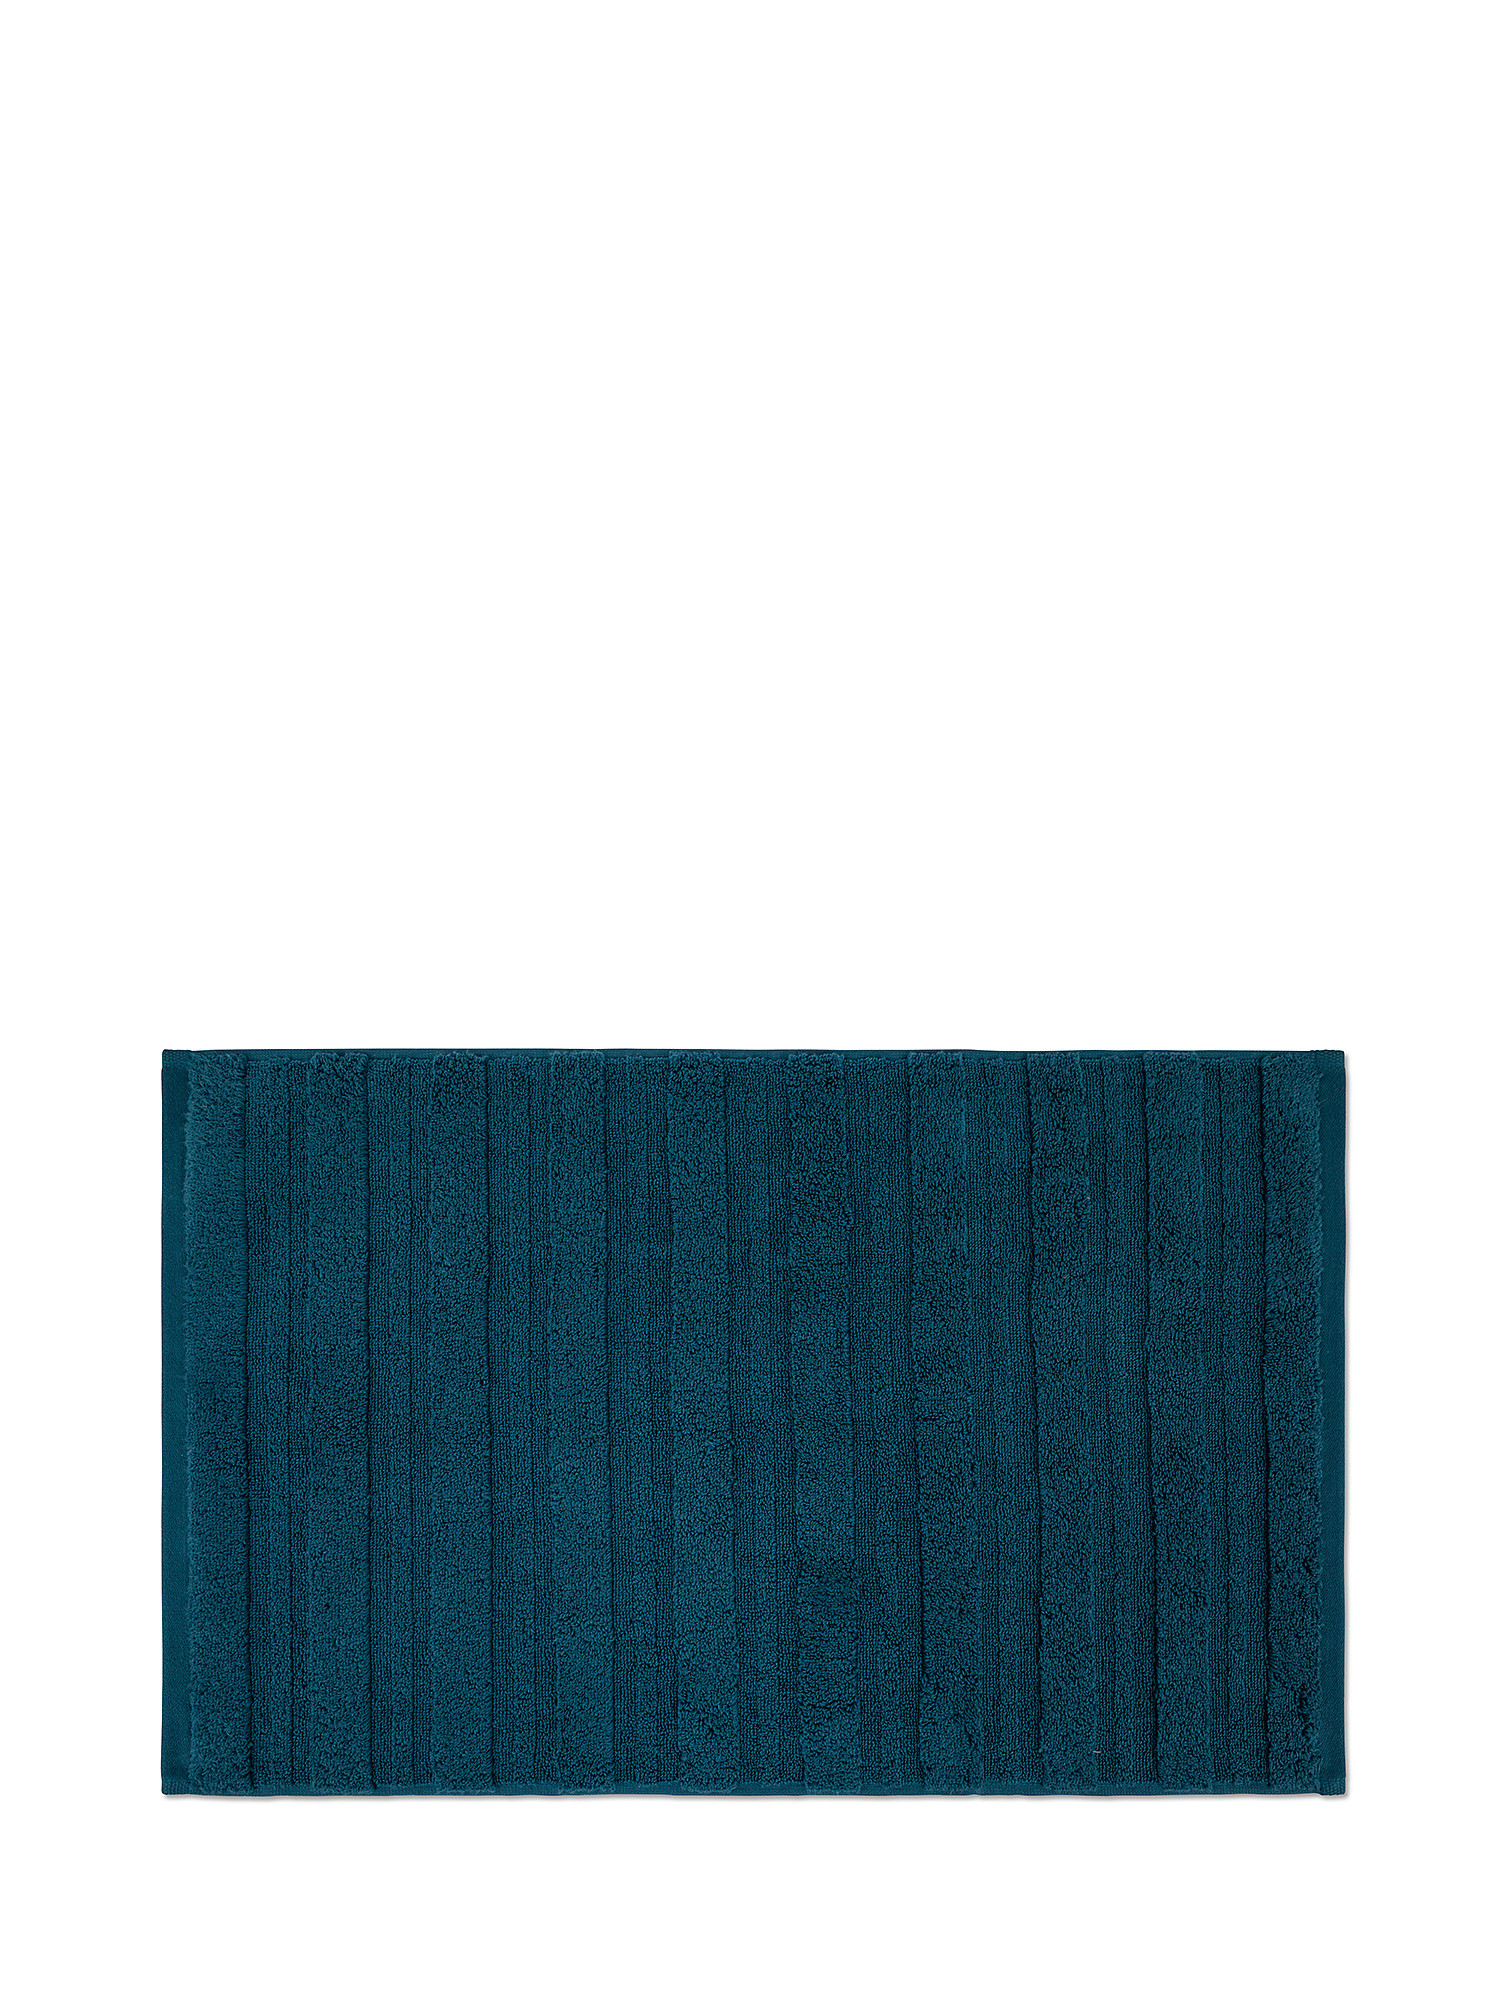 Zefiro Gold solid color 100% cotton towel, Blue, large image number 1